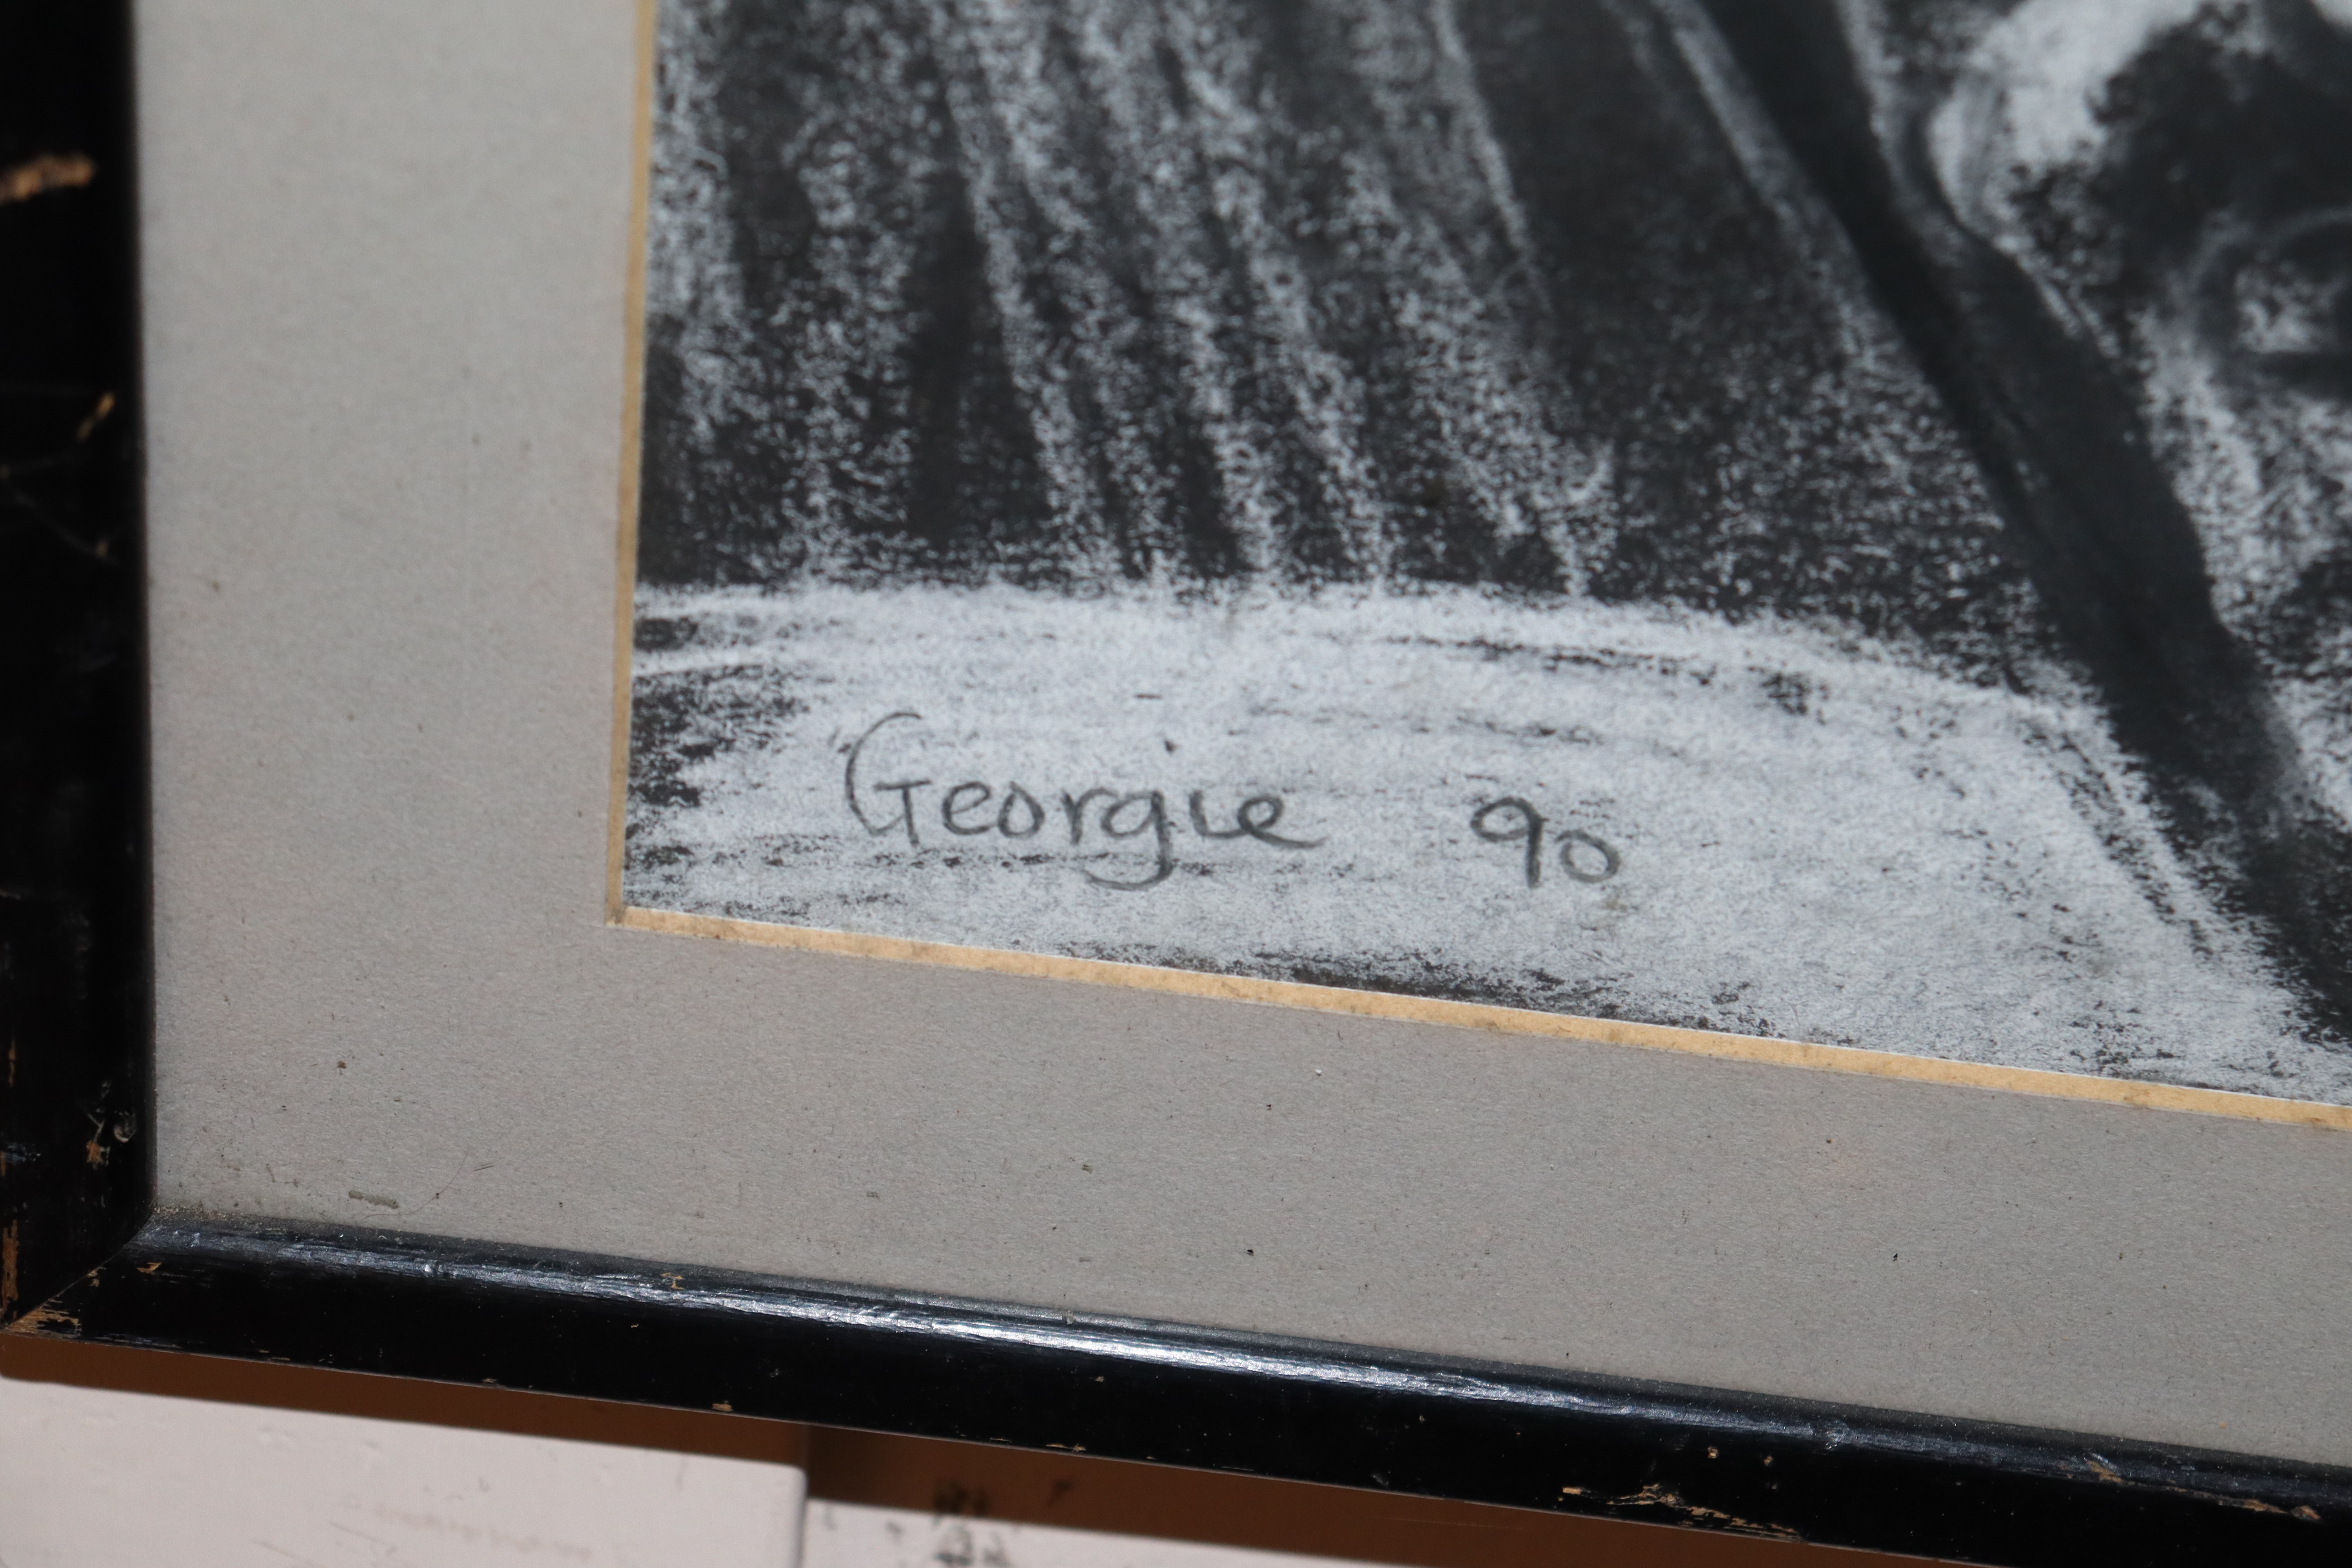 Chalk drawing portrait "Georgie '90" by Roy Clarke - Image 2 of 2